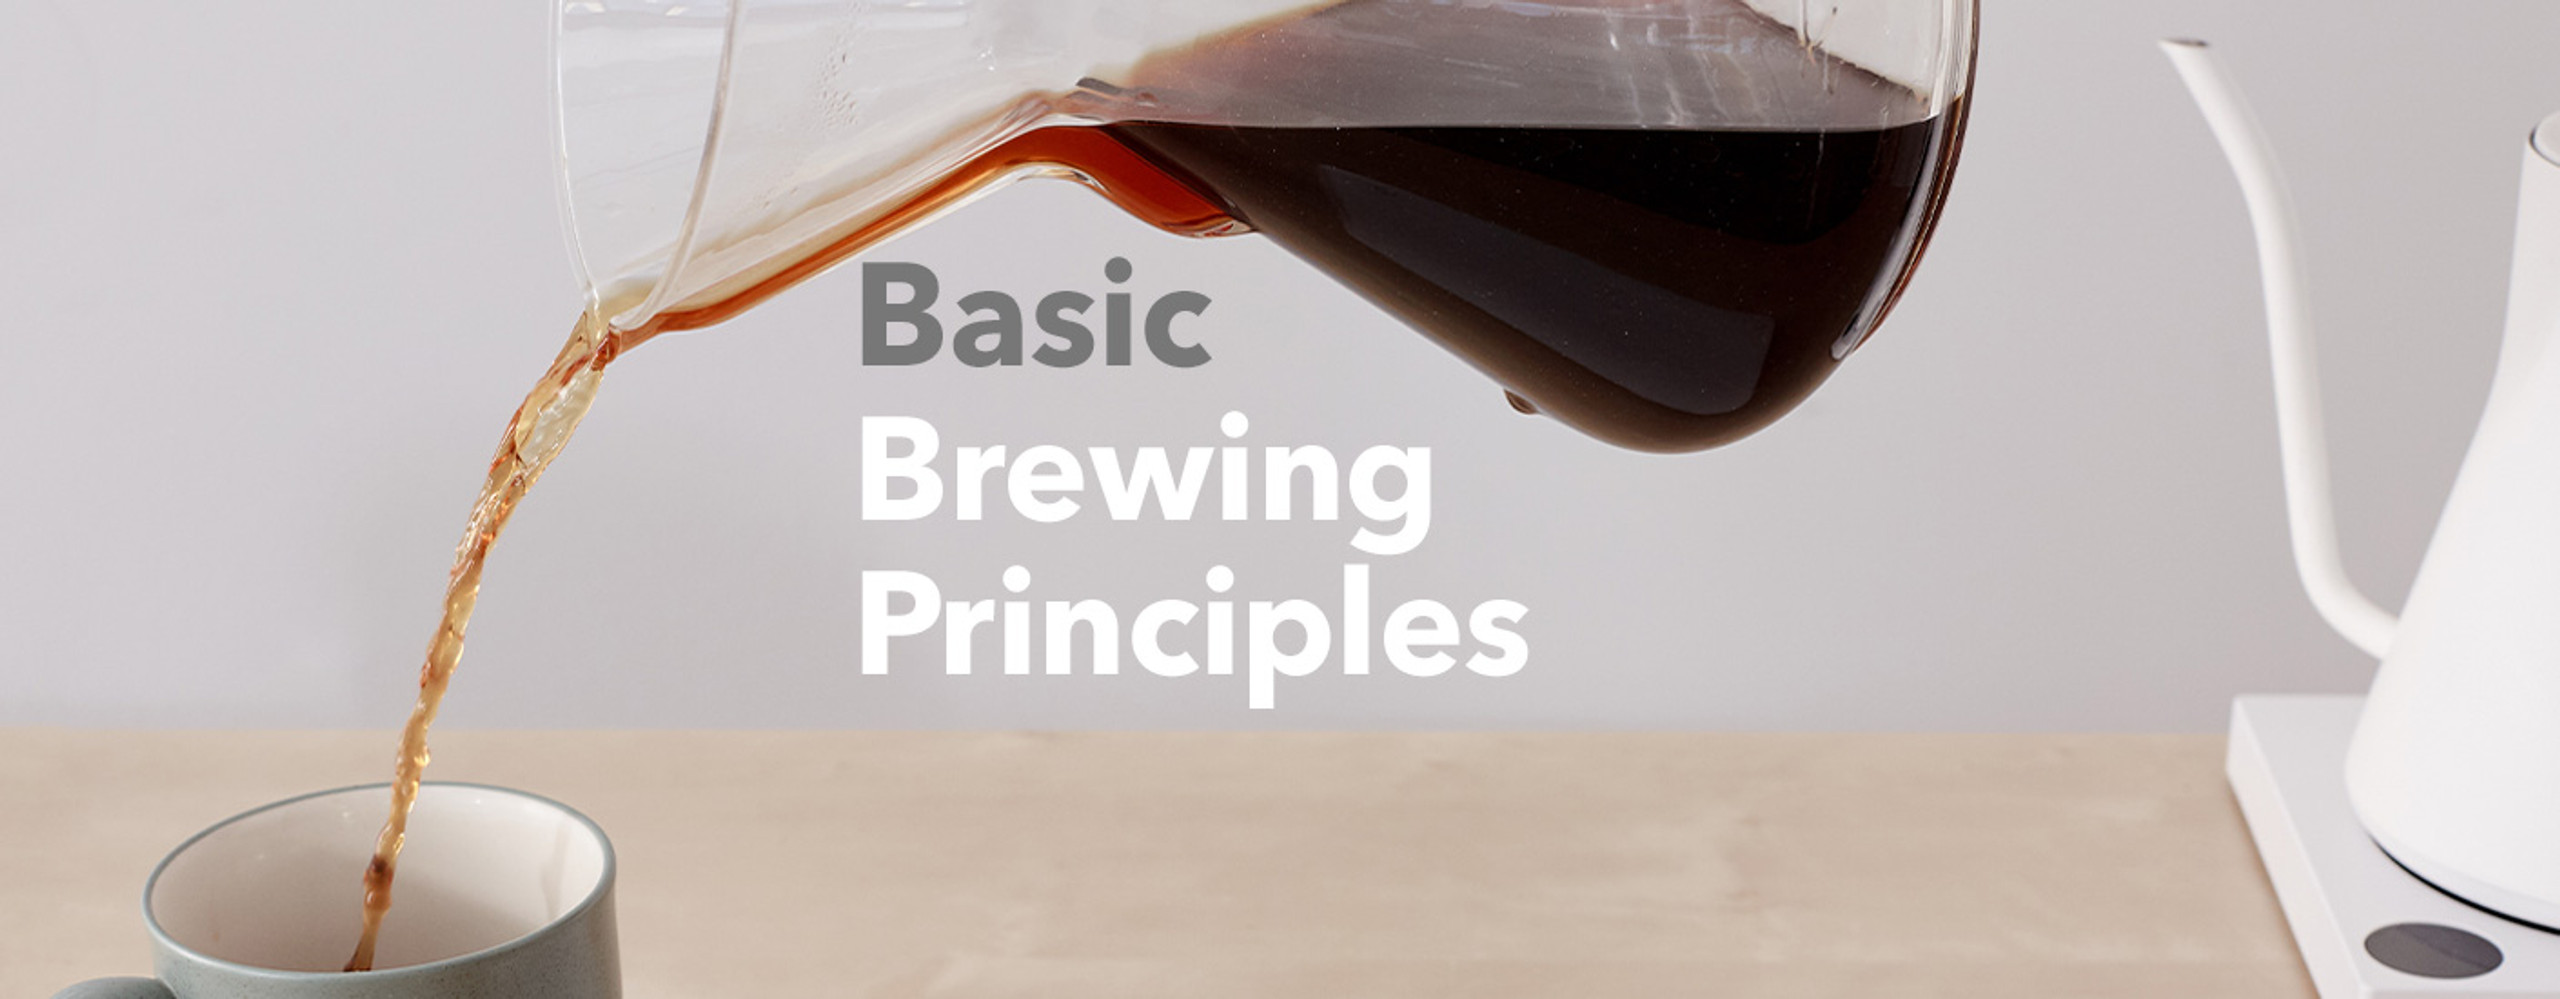 Basic Coffee Brewing Principles